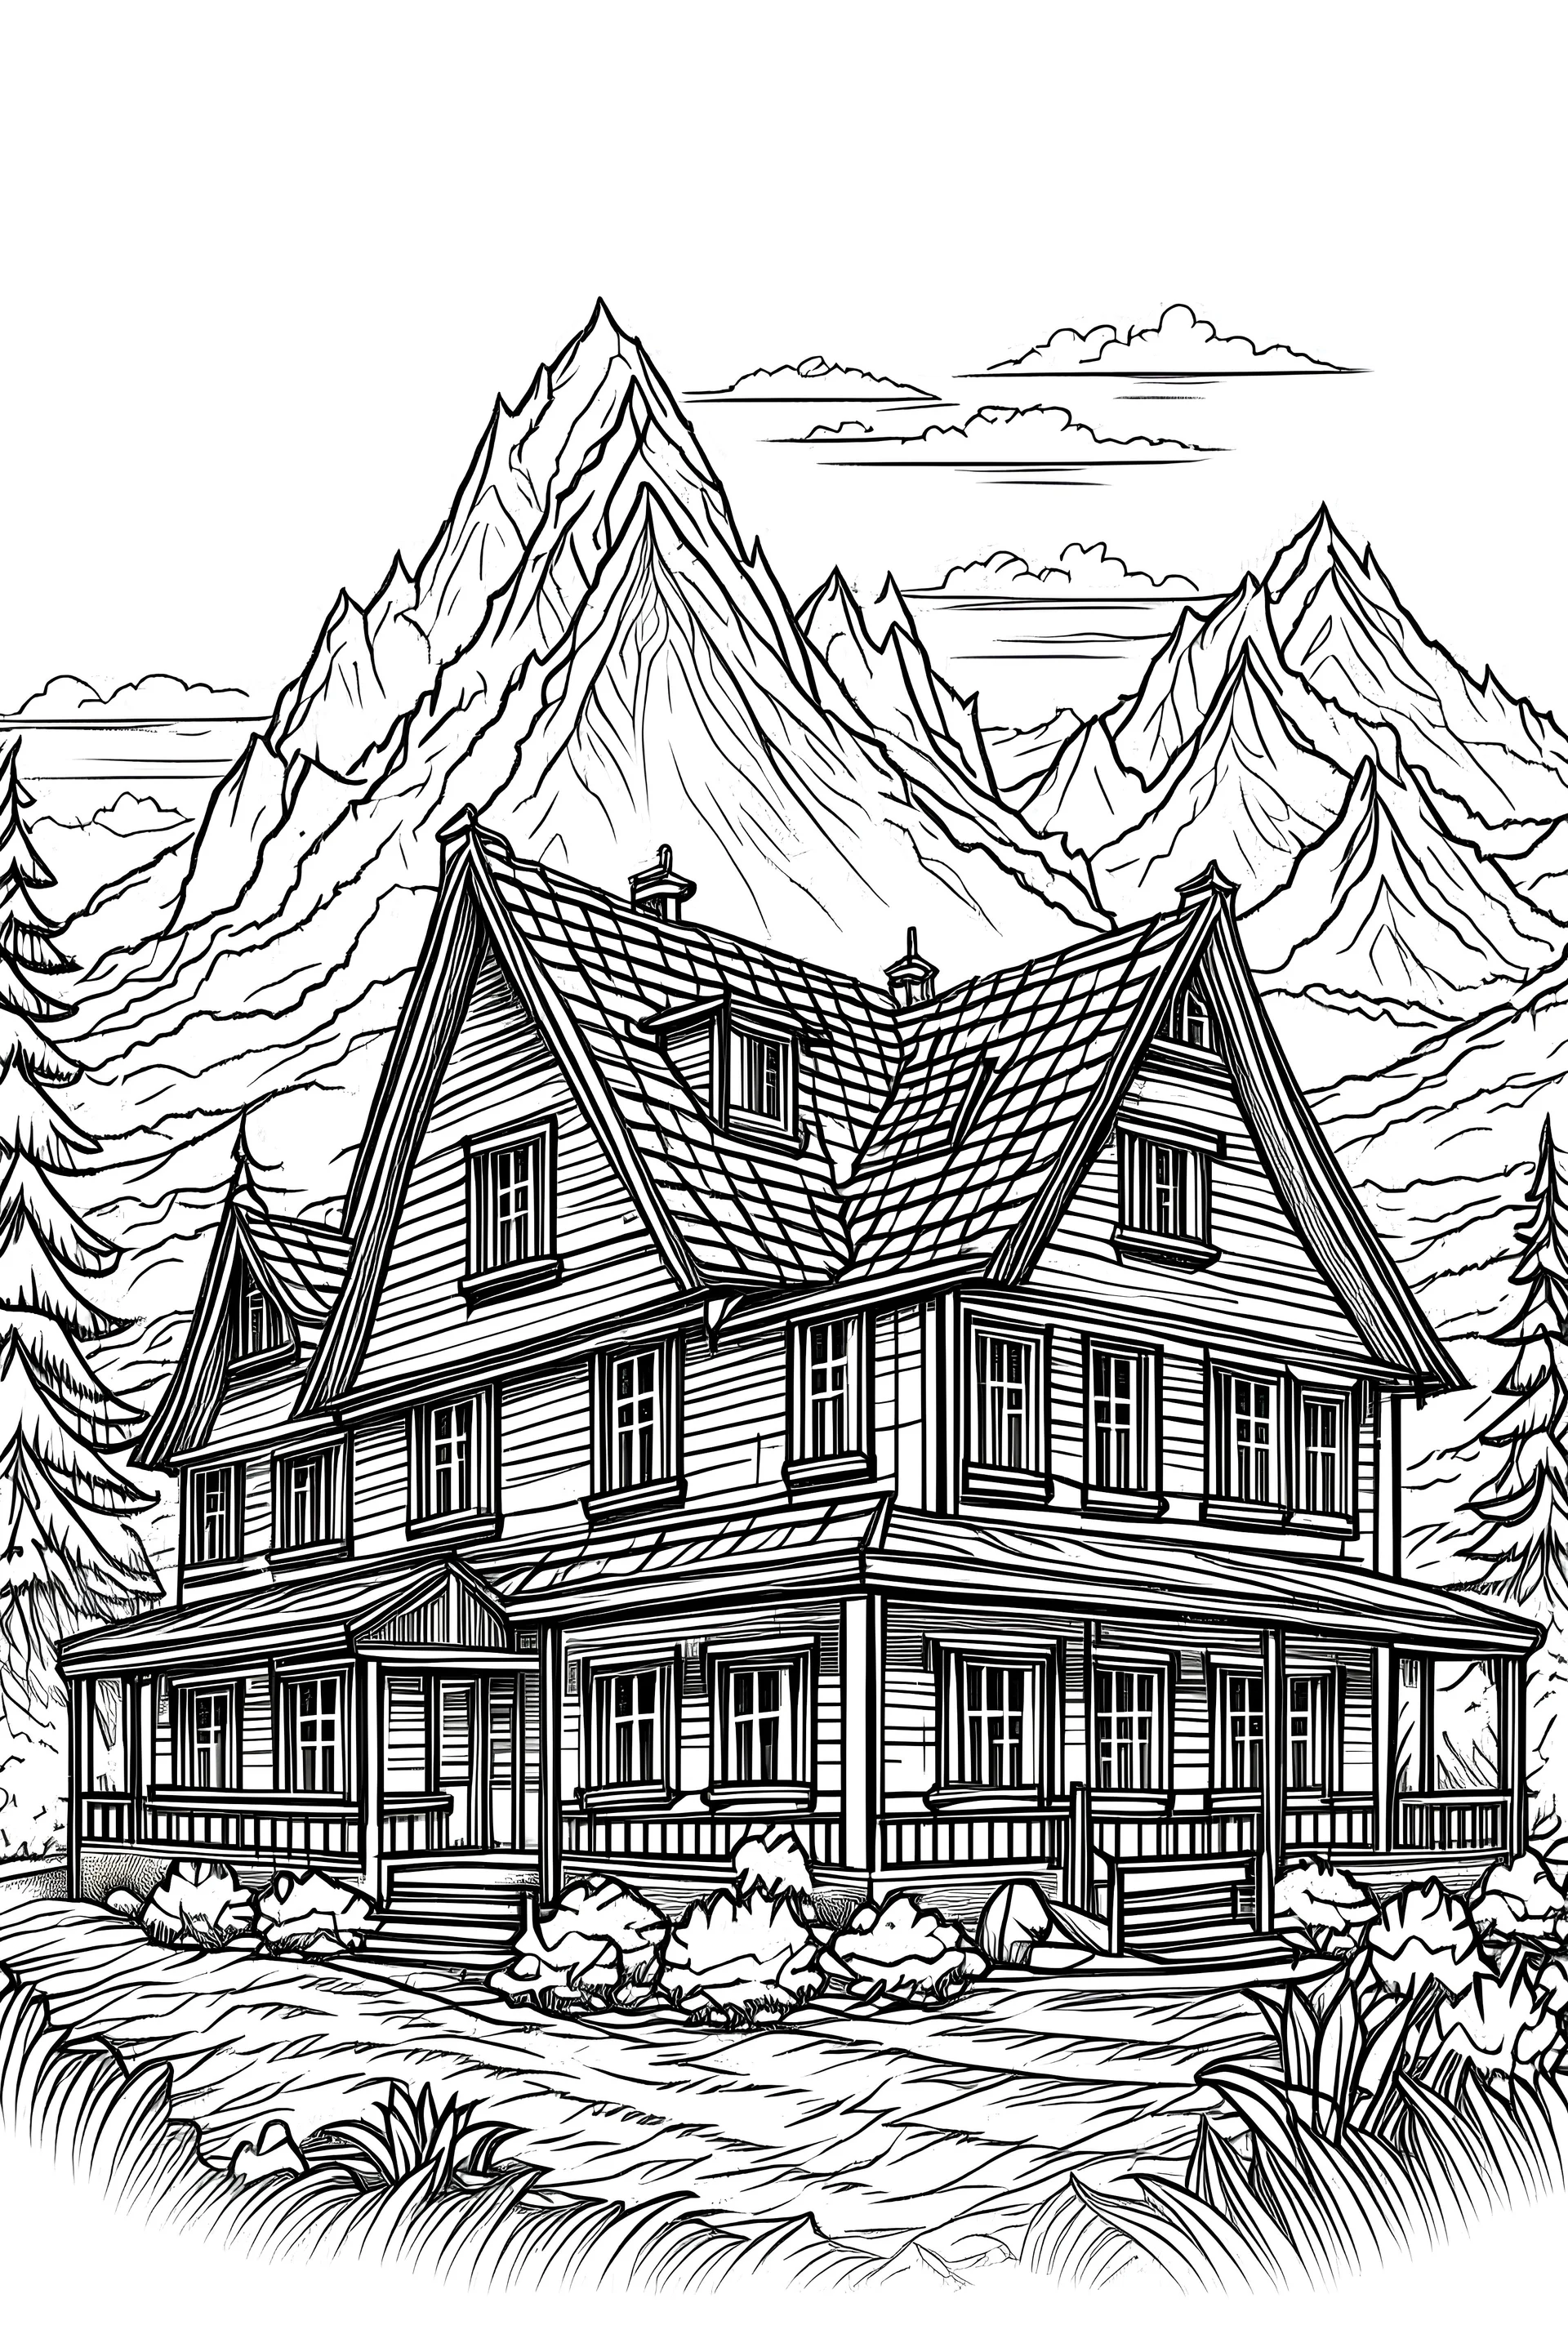 schita cu tema casa din Alpi , incadrata bine in rama , hasurat cu linii fine , cu mare acuratete si contrast , stil gravura pe metal